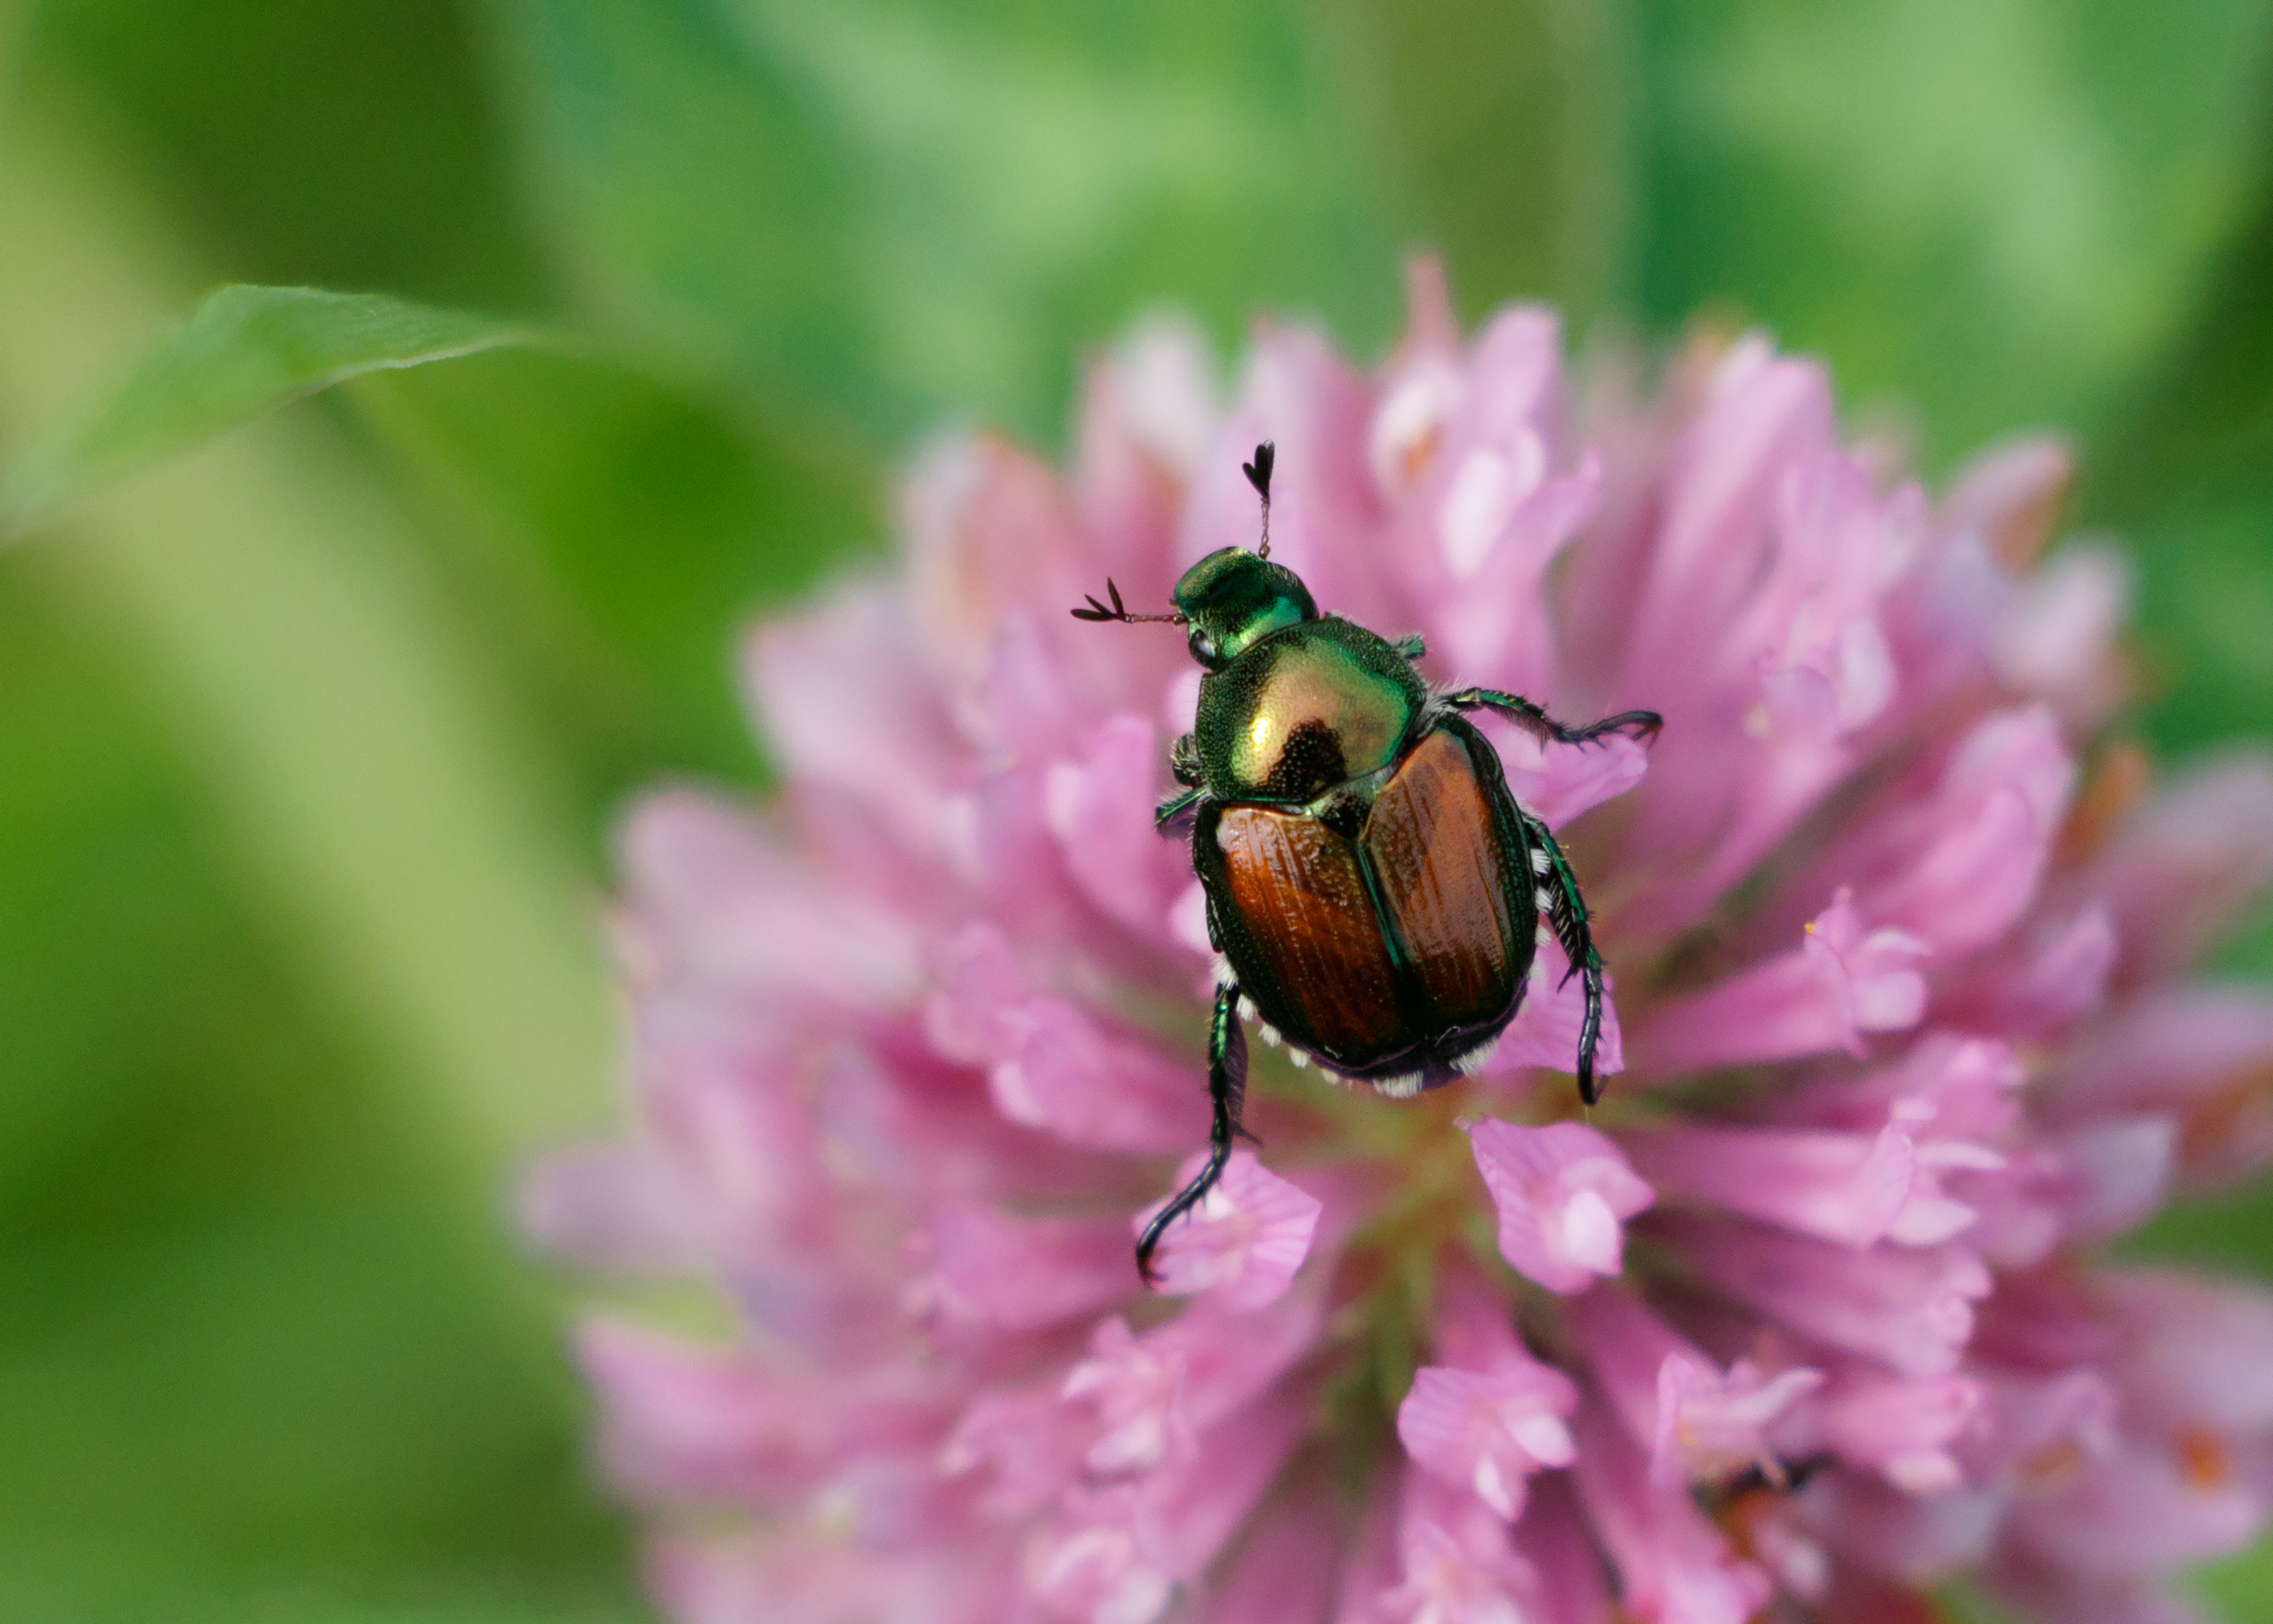 A Japanese Beetle on a flower | Shutterstock